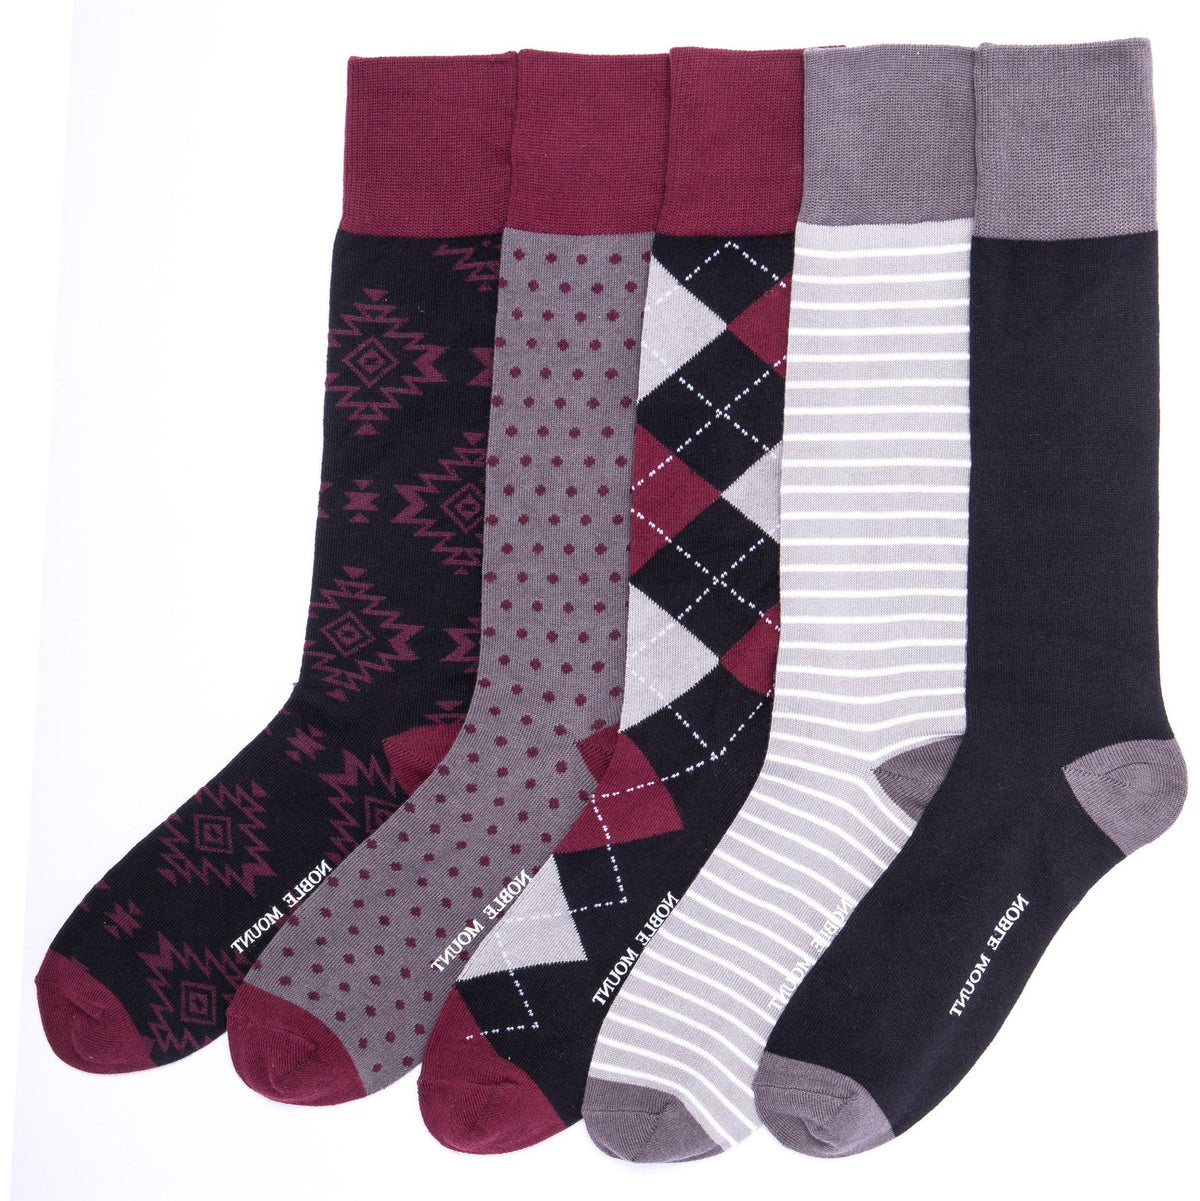 Men's Combed Cotton Weekday Dress Socks 5-Pack - Set A2